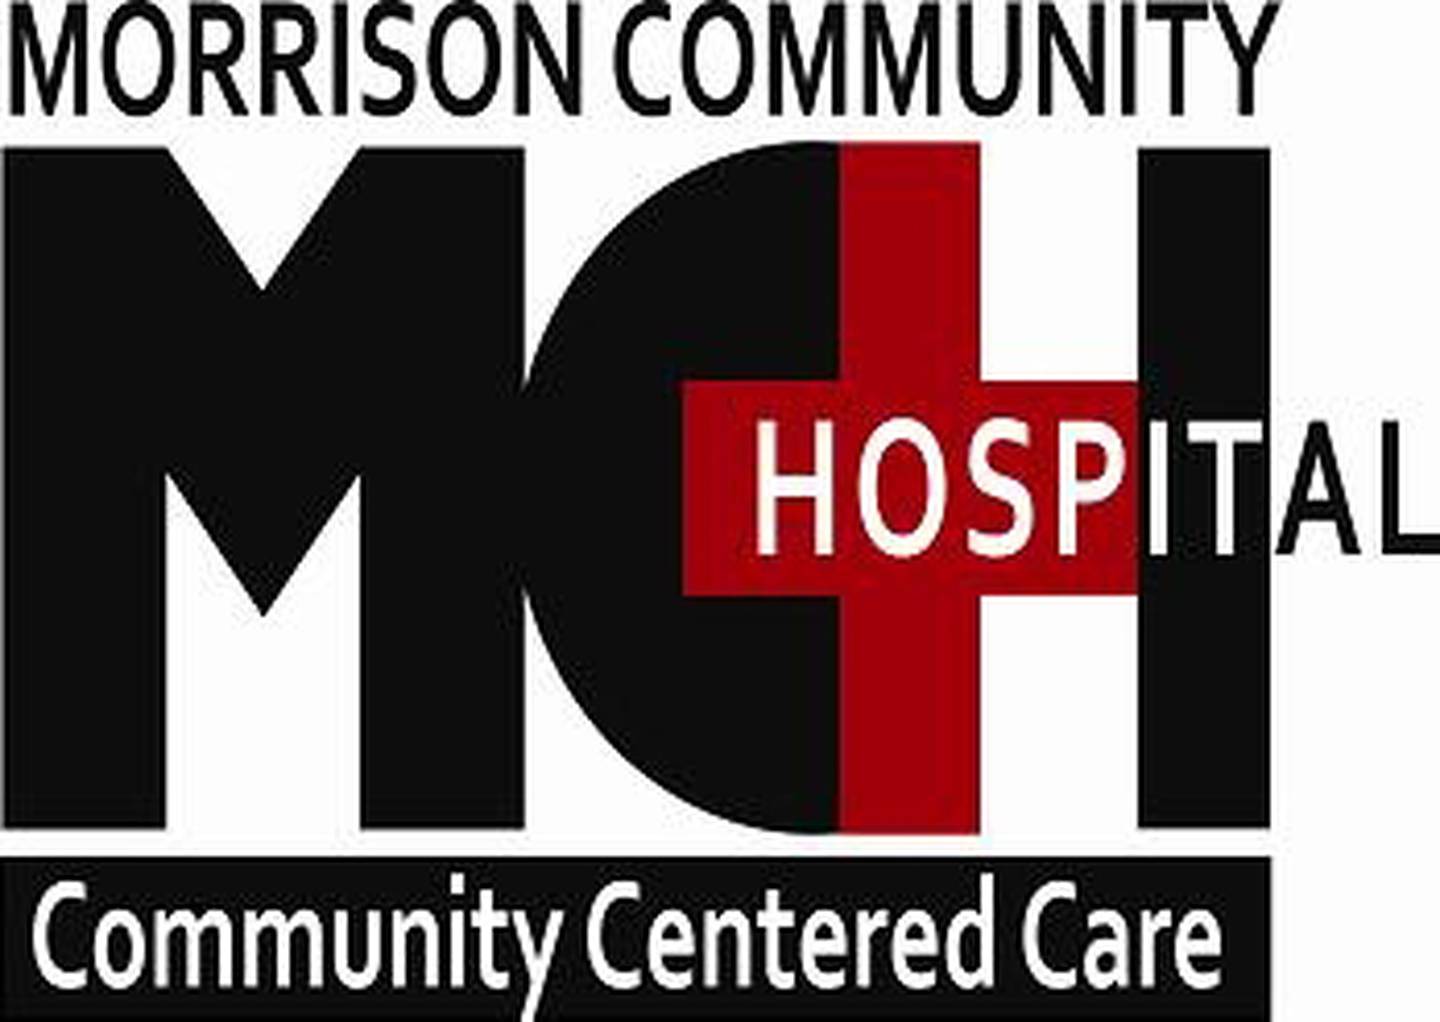 Morrison Community Hospital logo